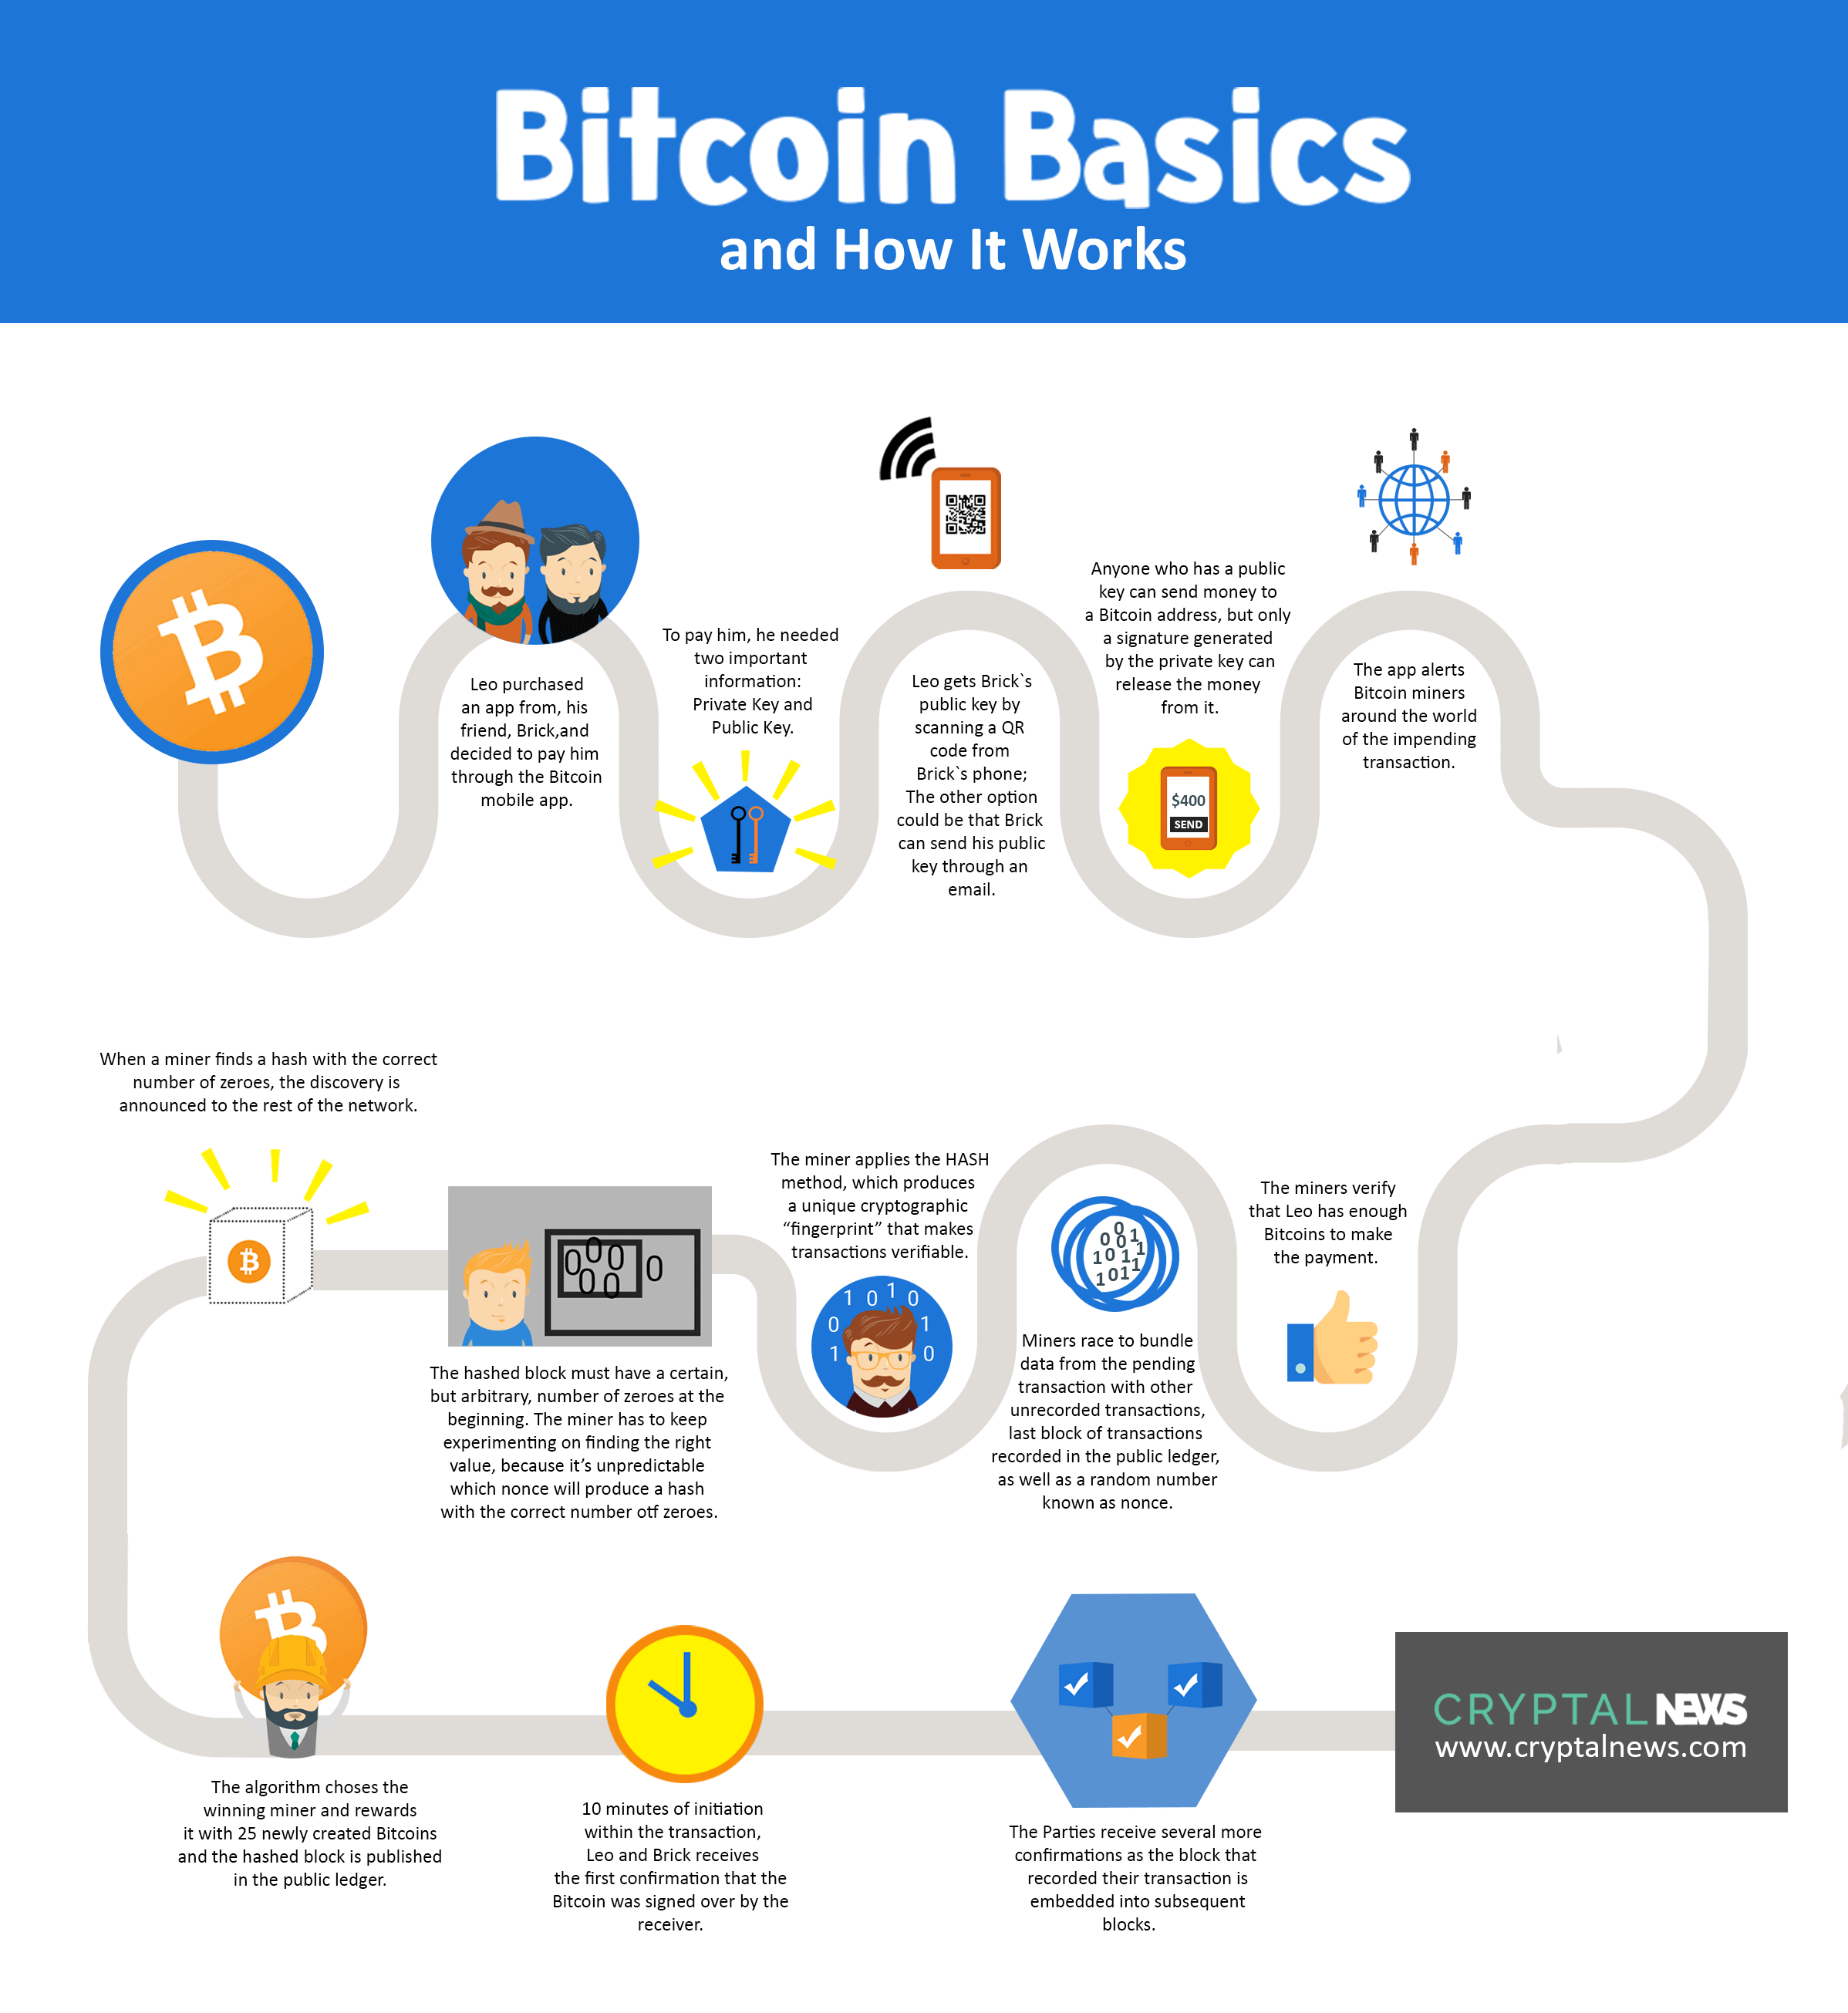 formation bitcoin